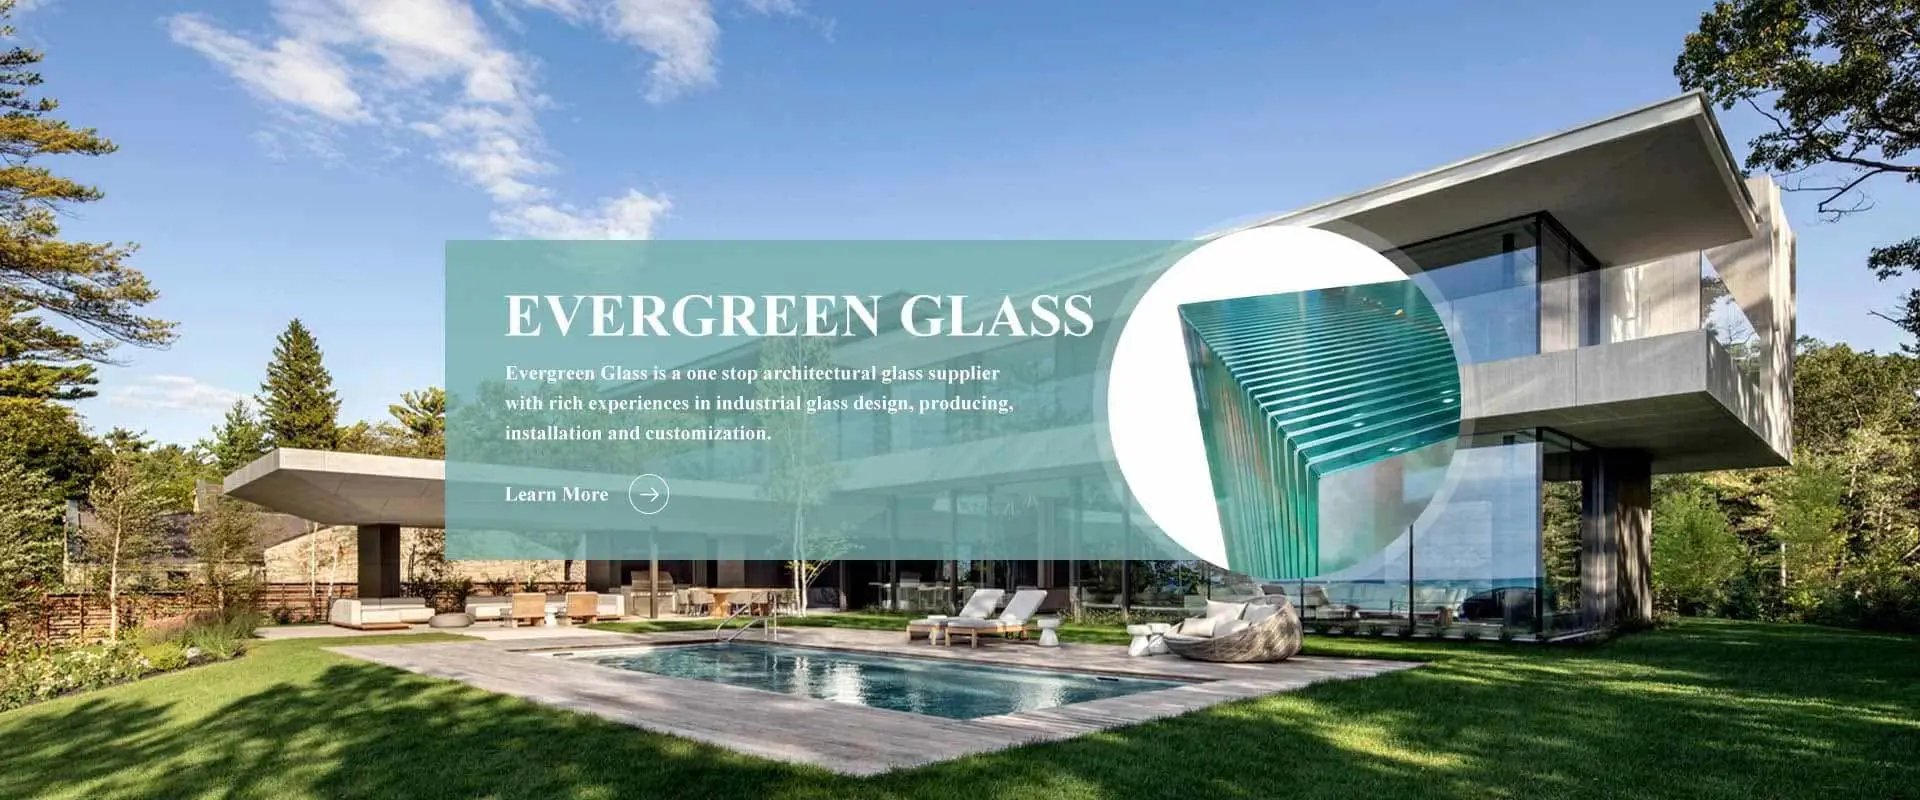 Evergreen Glass